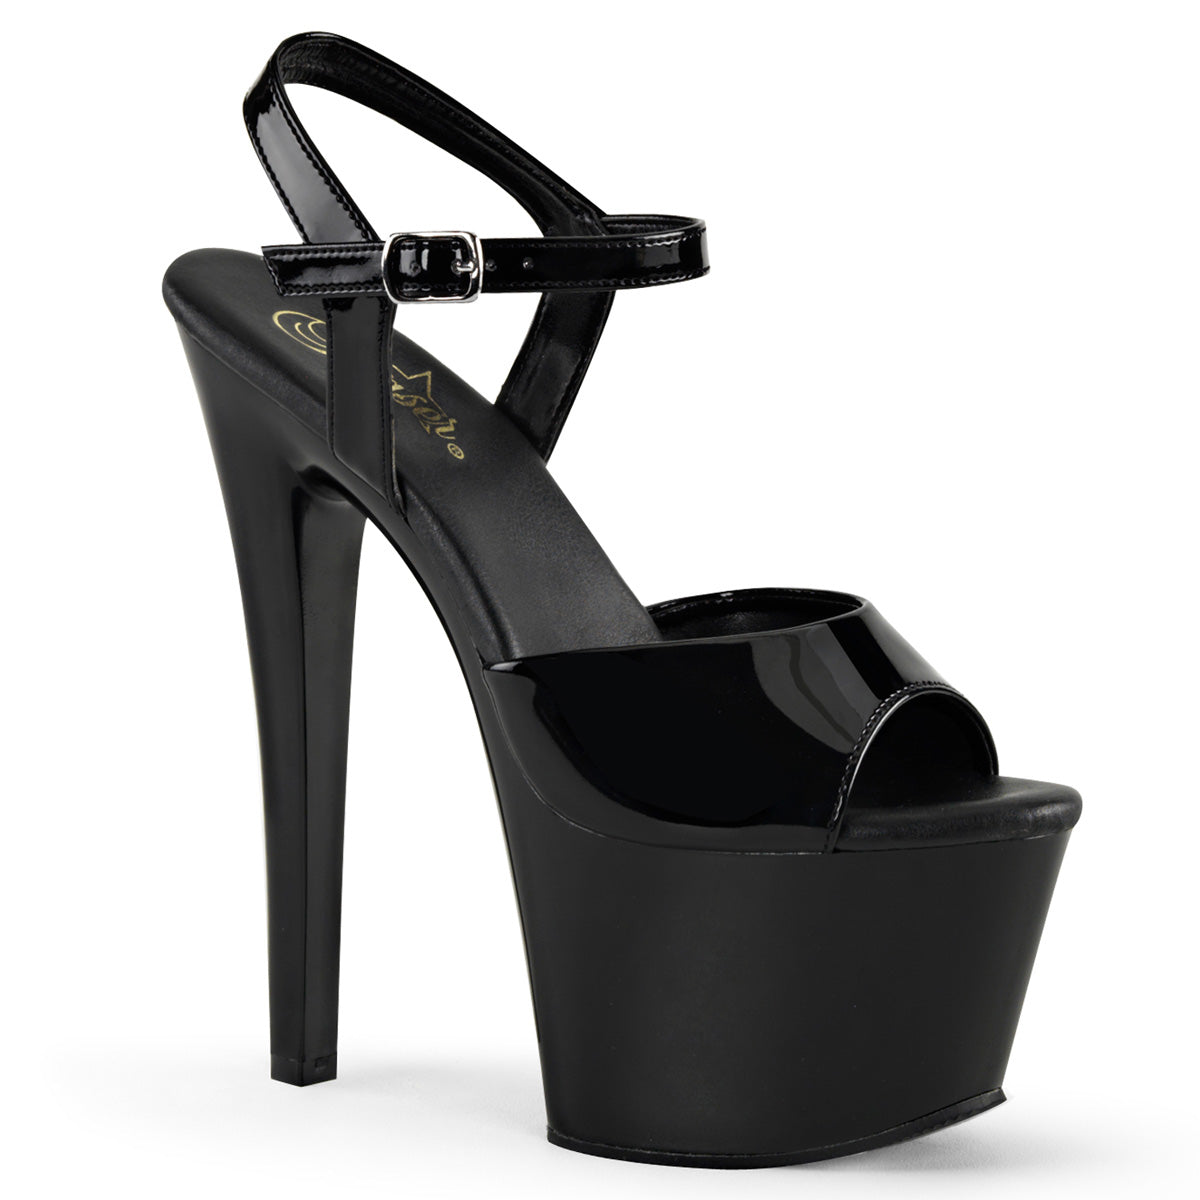 SKY-309VL Black Patent Platform Sandal